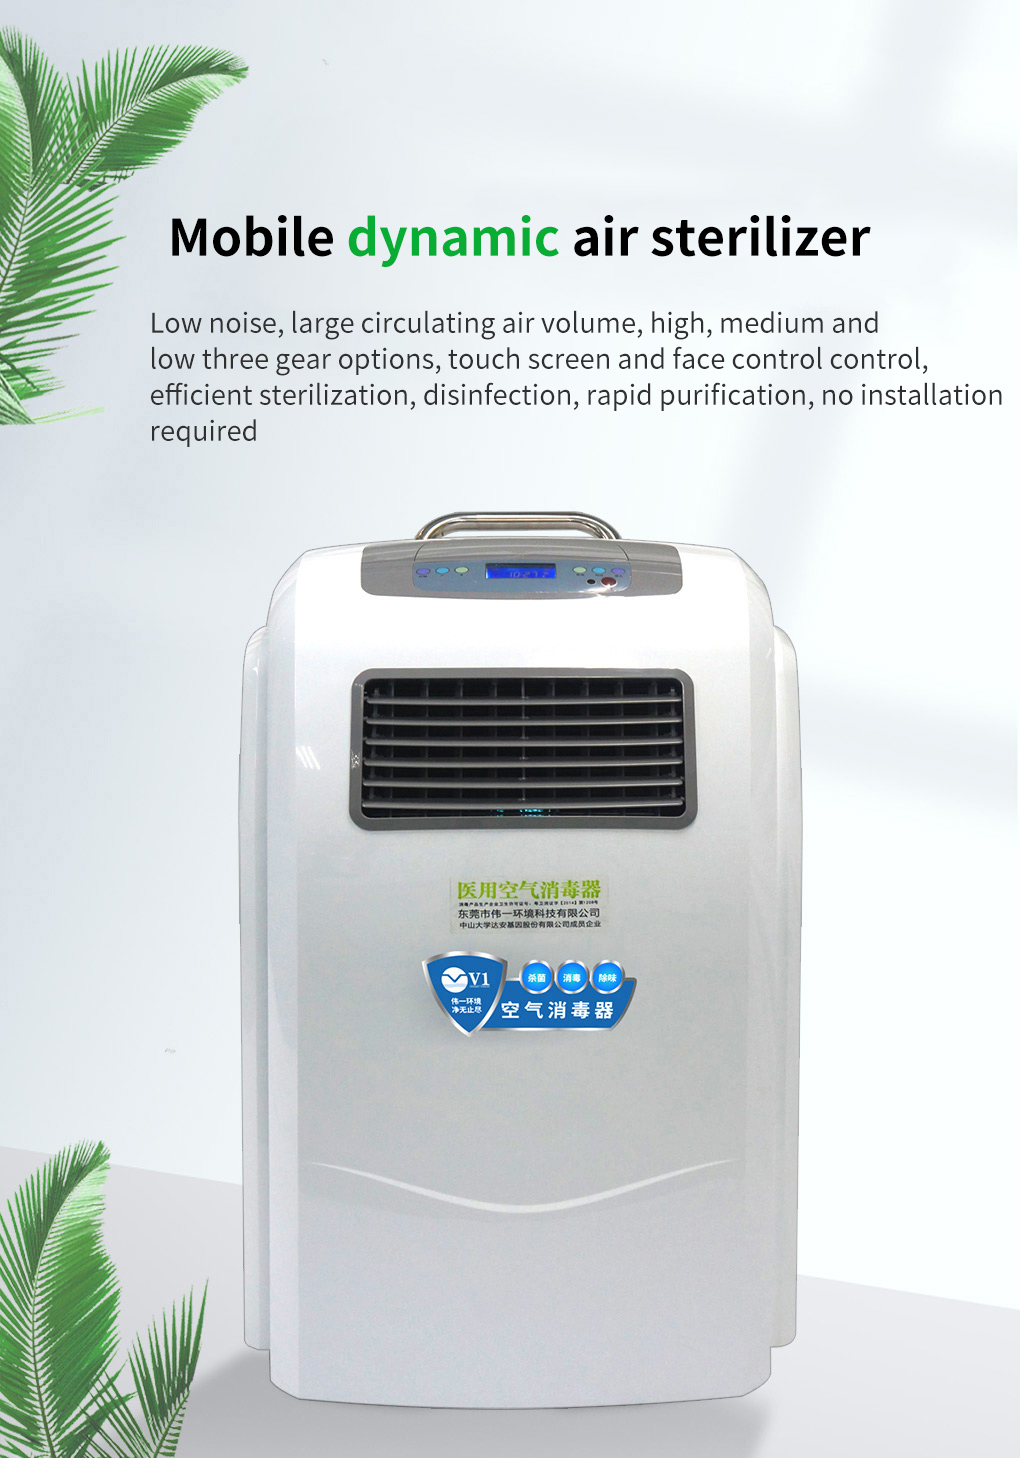 Mobile dynamic air sterilizer